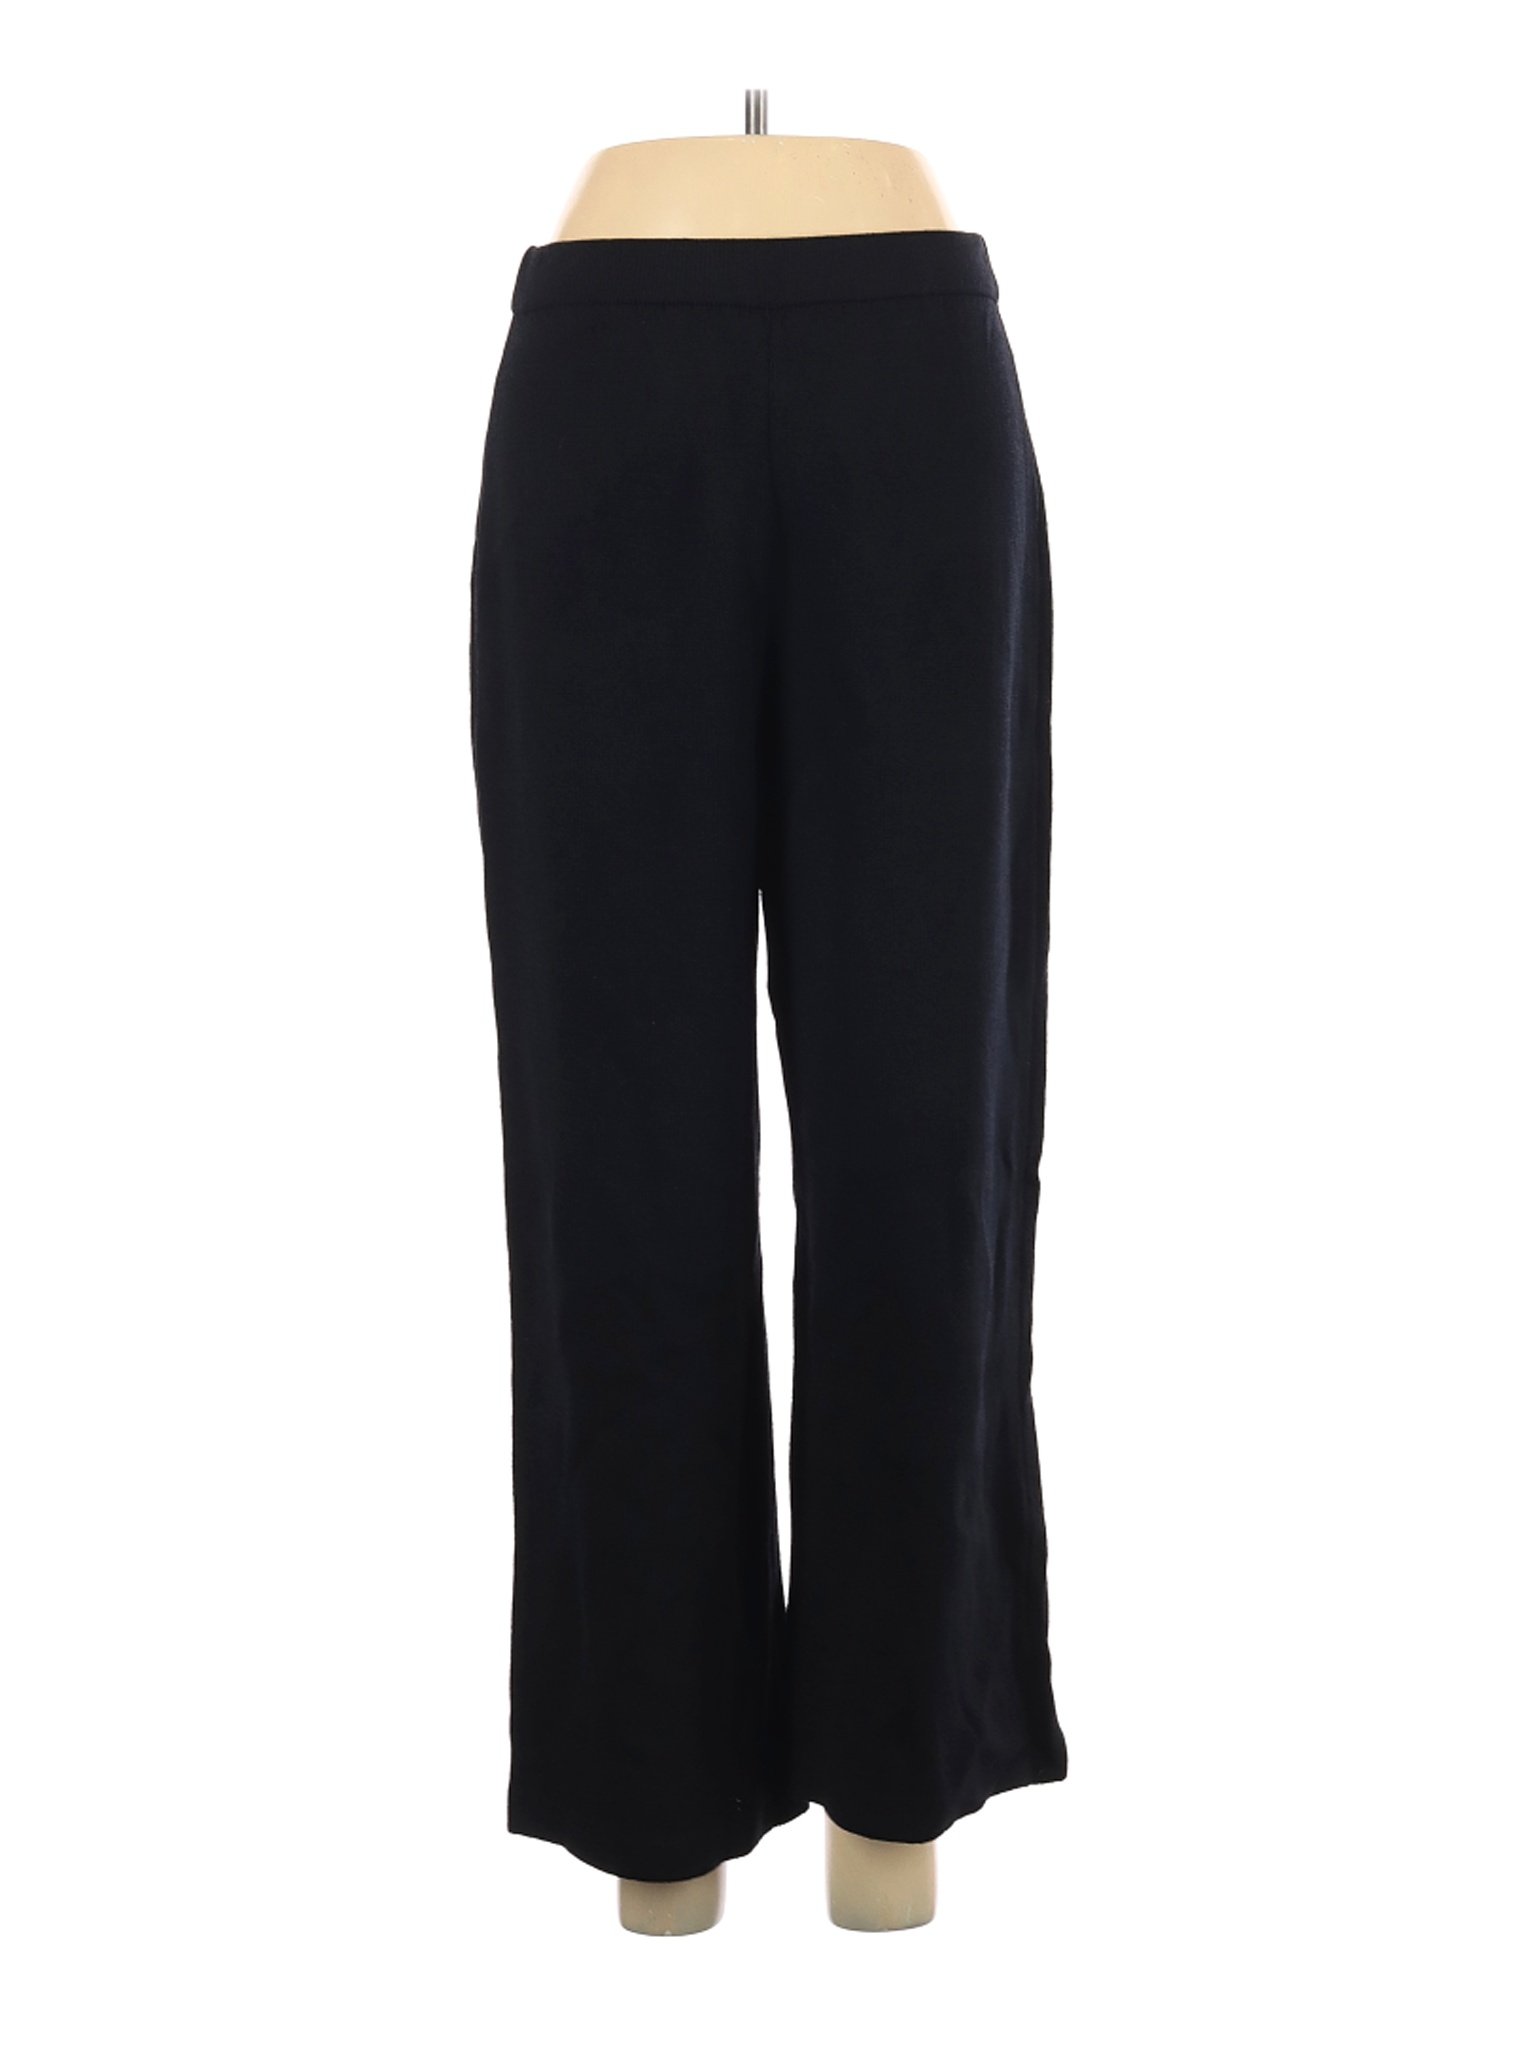 St. John Collection Women Black Casual Pants 8 | eBay